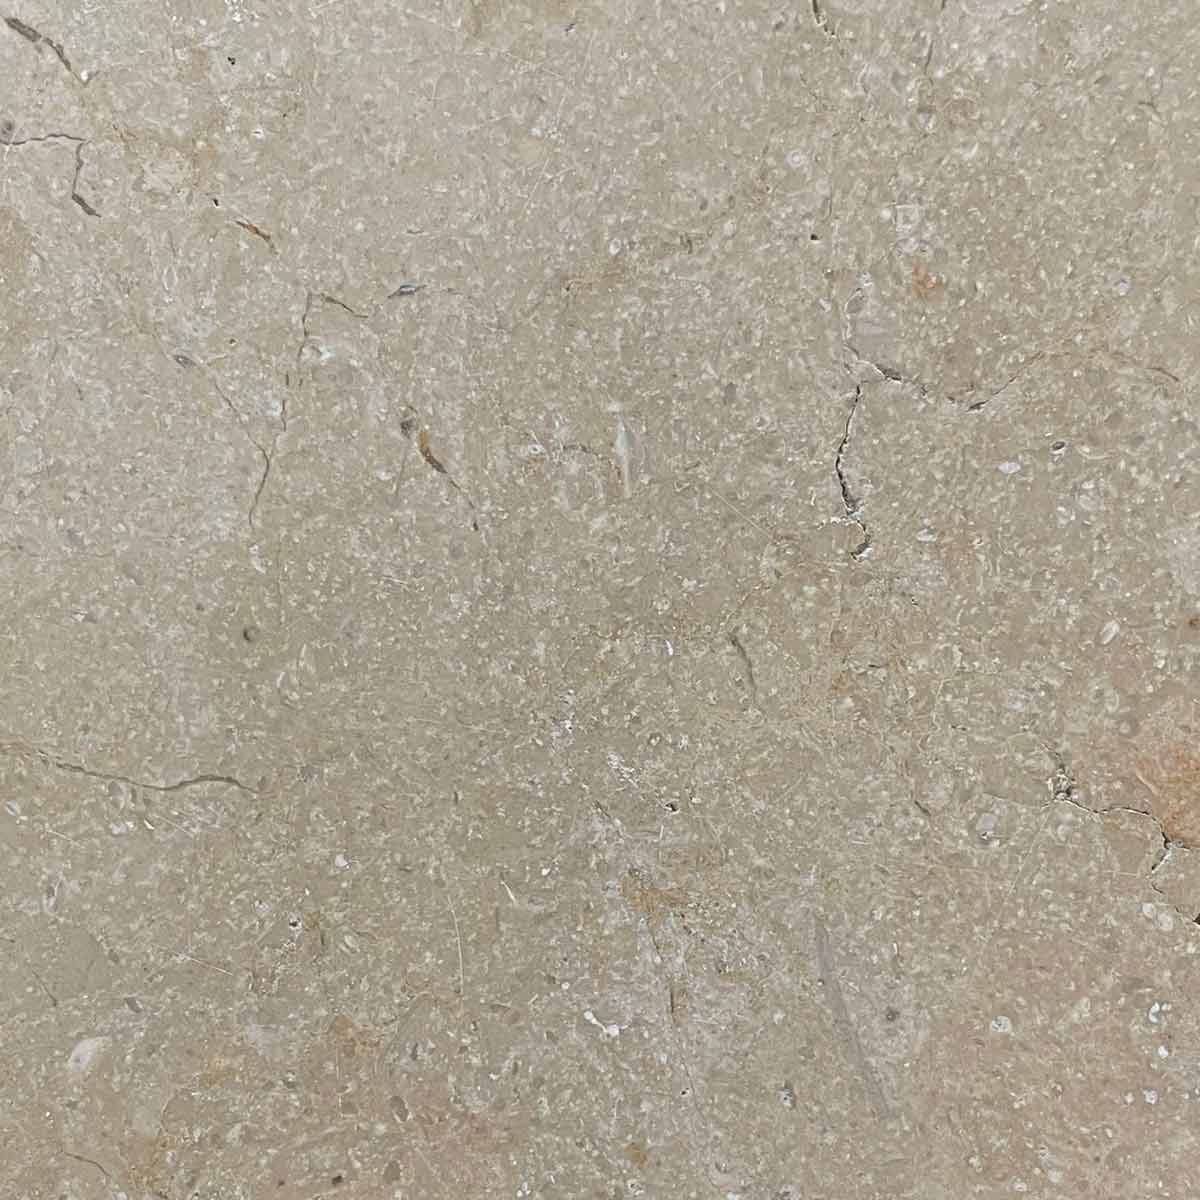 Svevo Perlato Beige Marble (cod. 17)